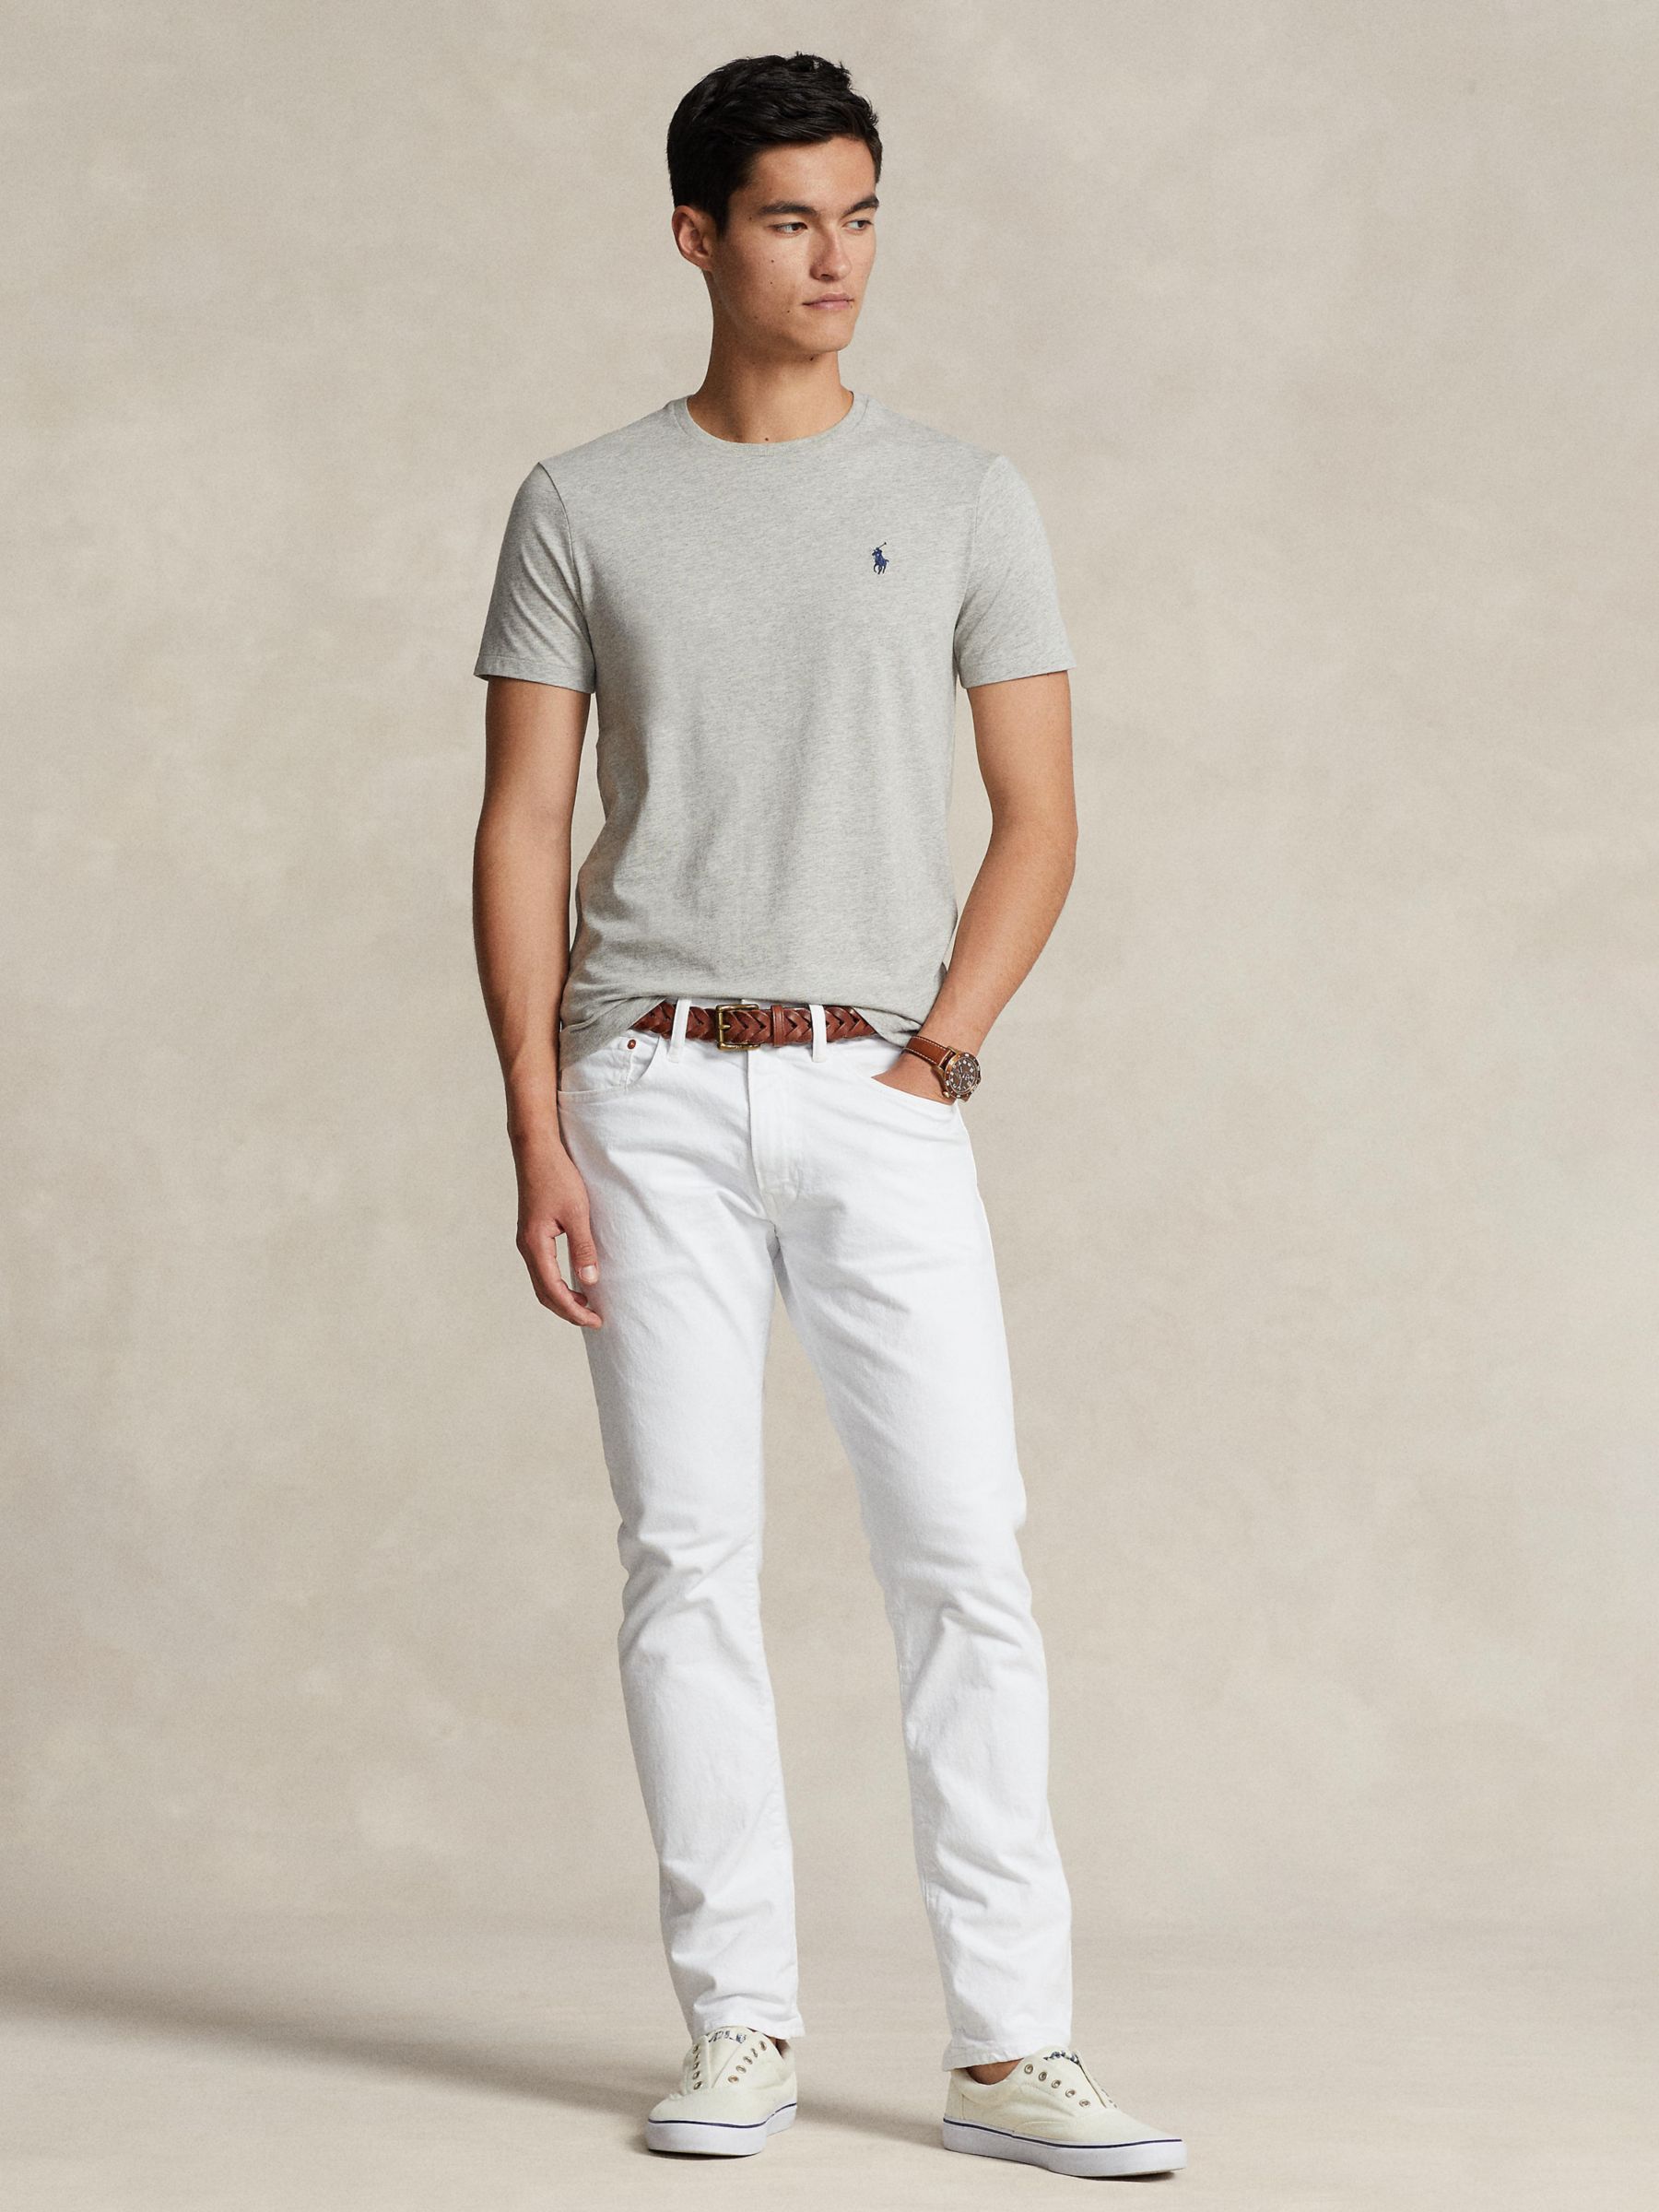 Buy Polo Ralph Lauren Custom Slim Fit T-Shirt Online at johnlewis.com